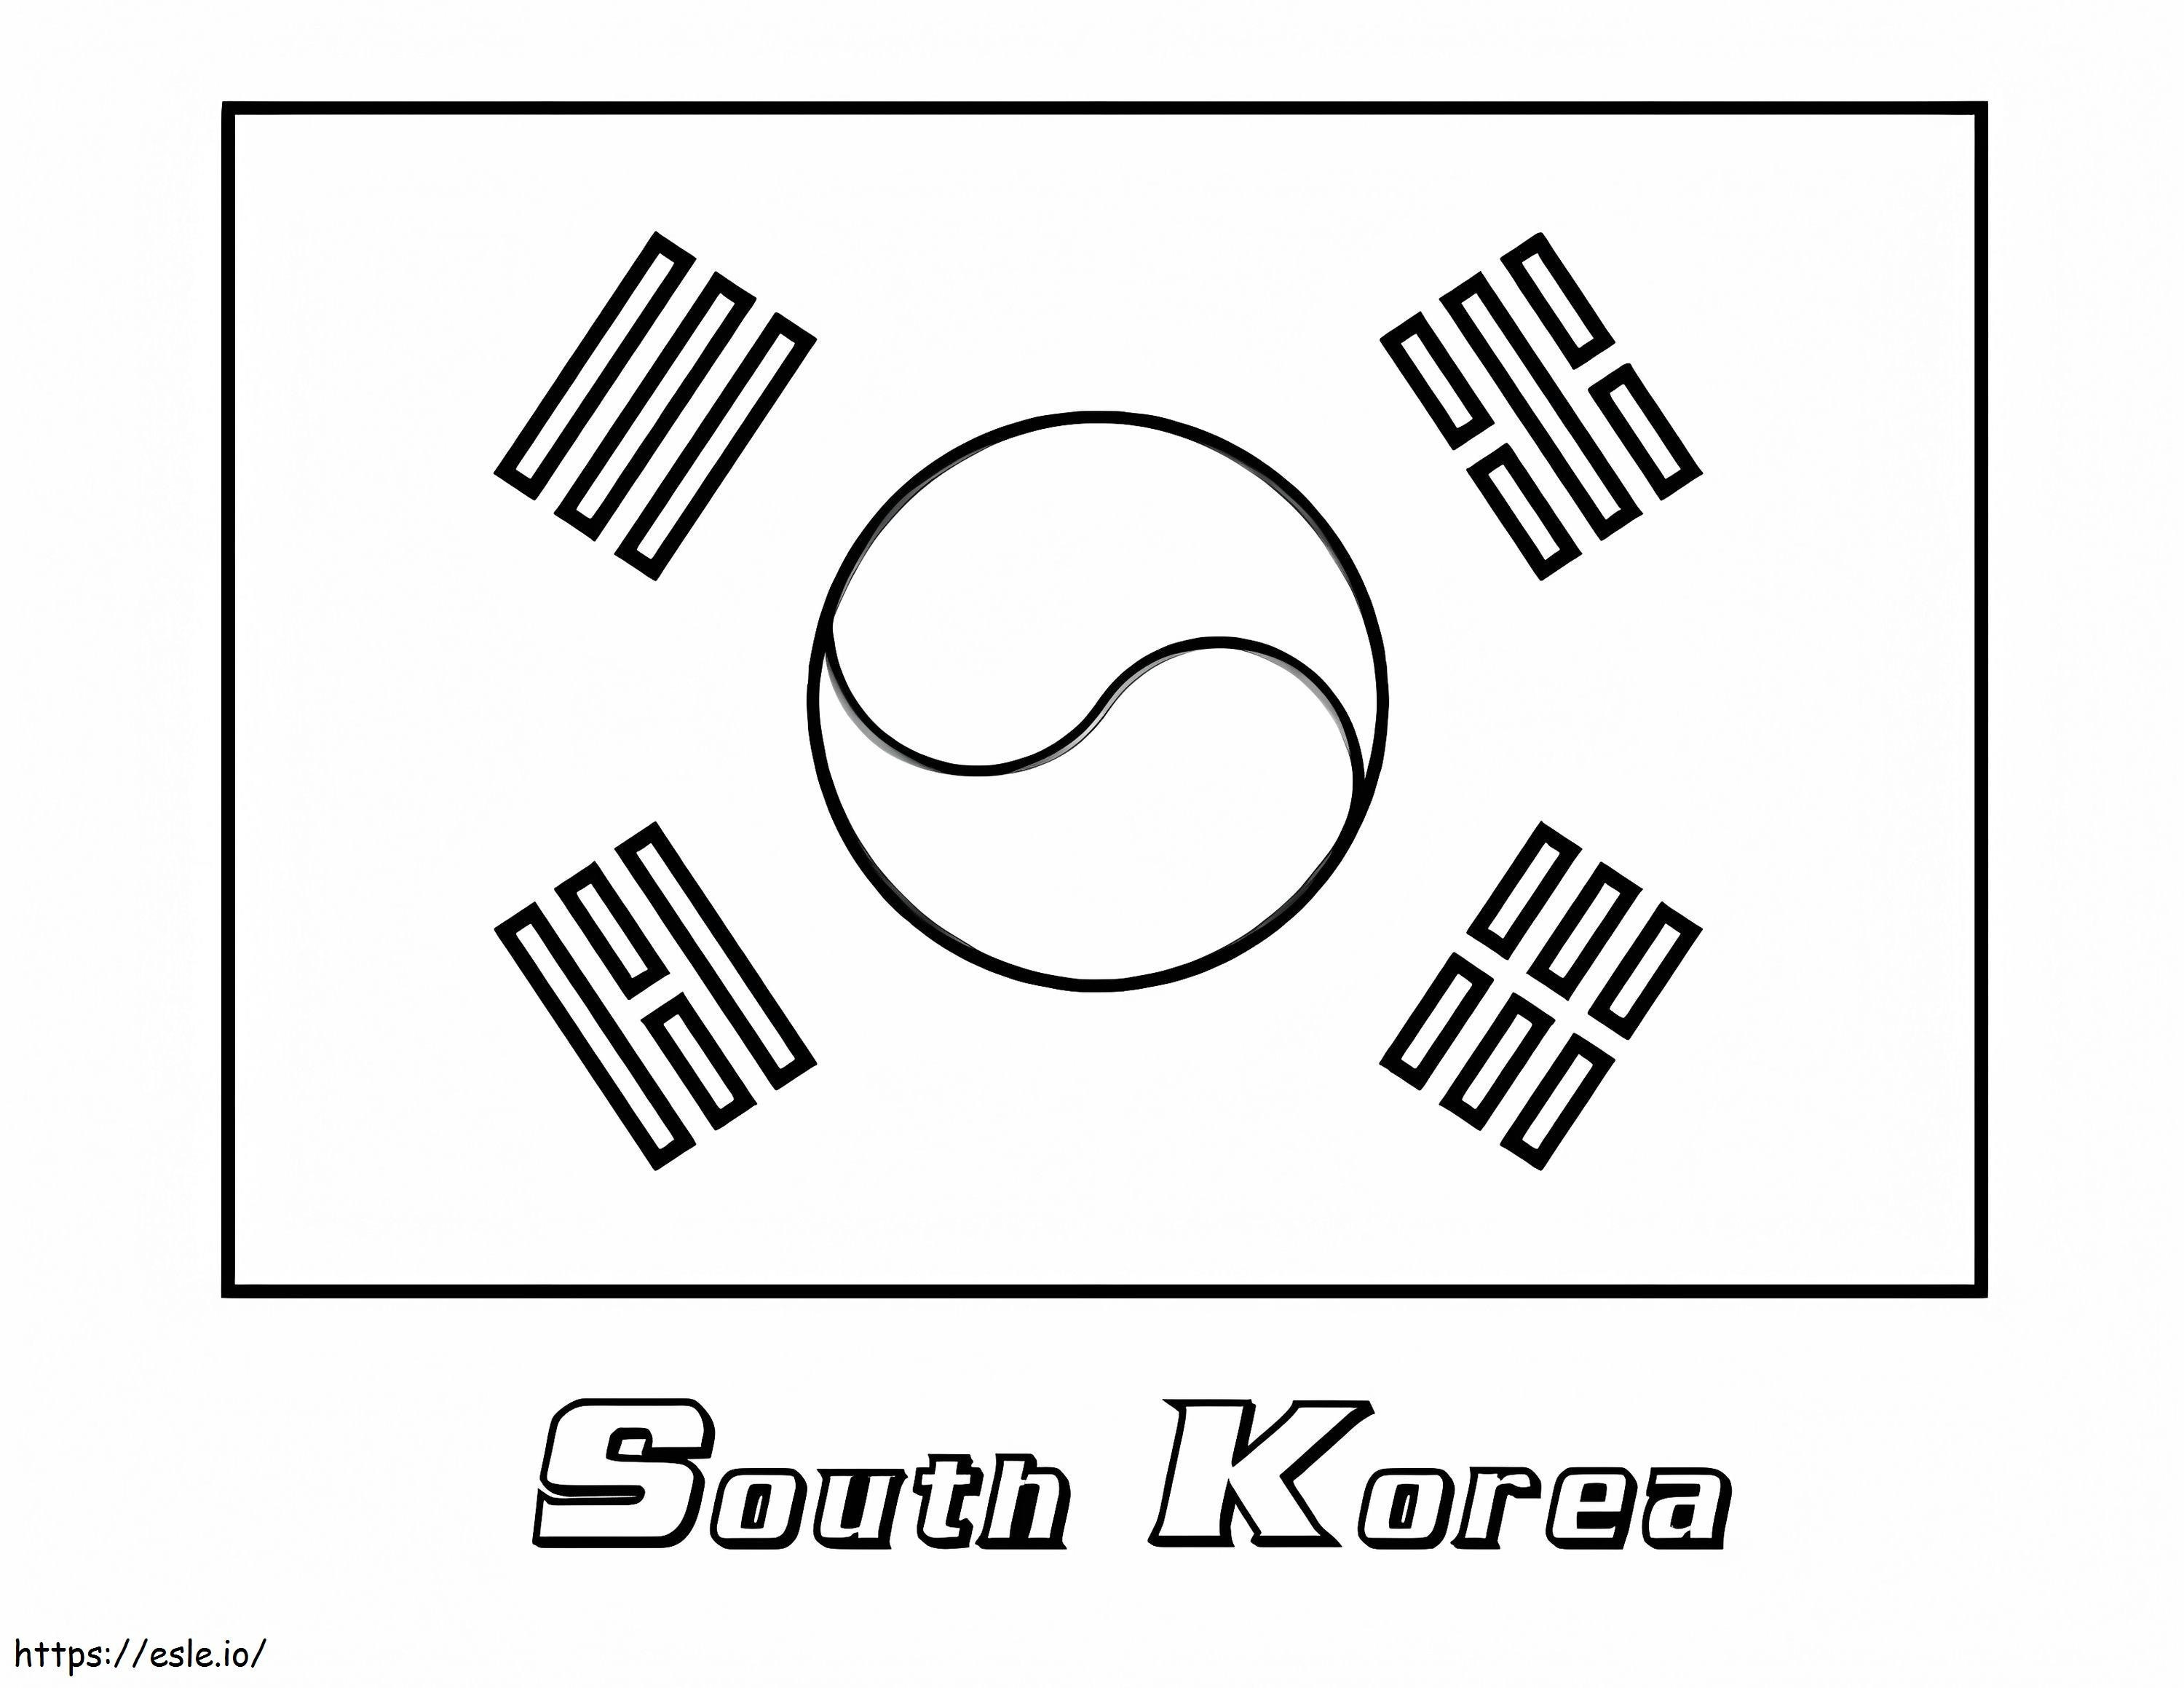 South Korea Flag coloring page